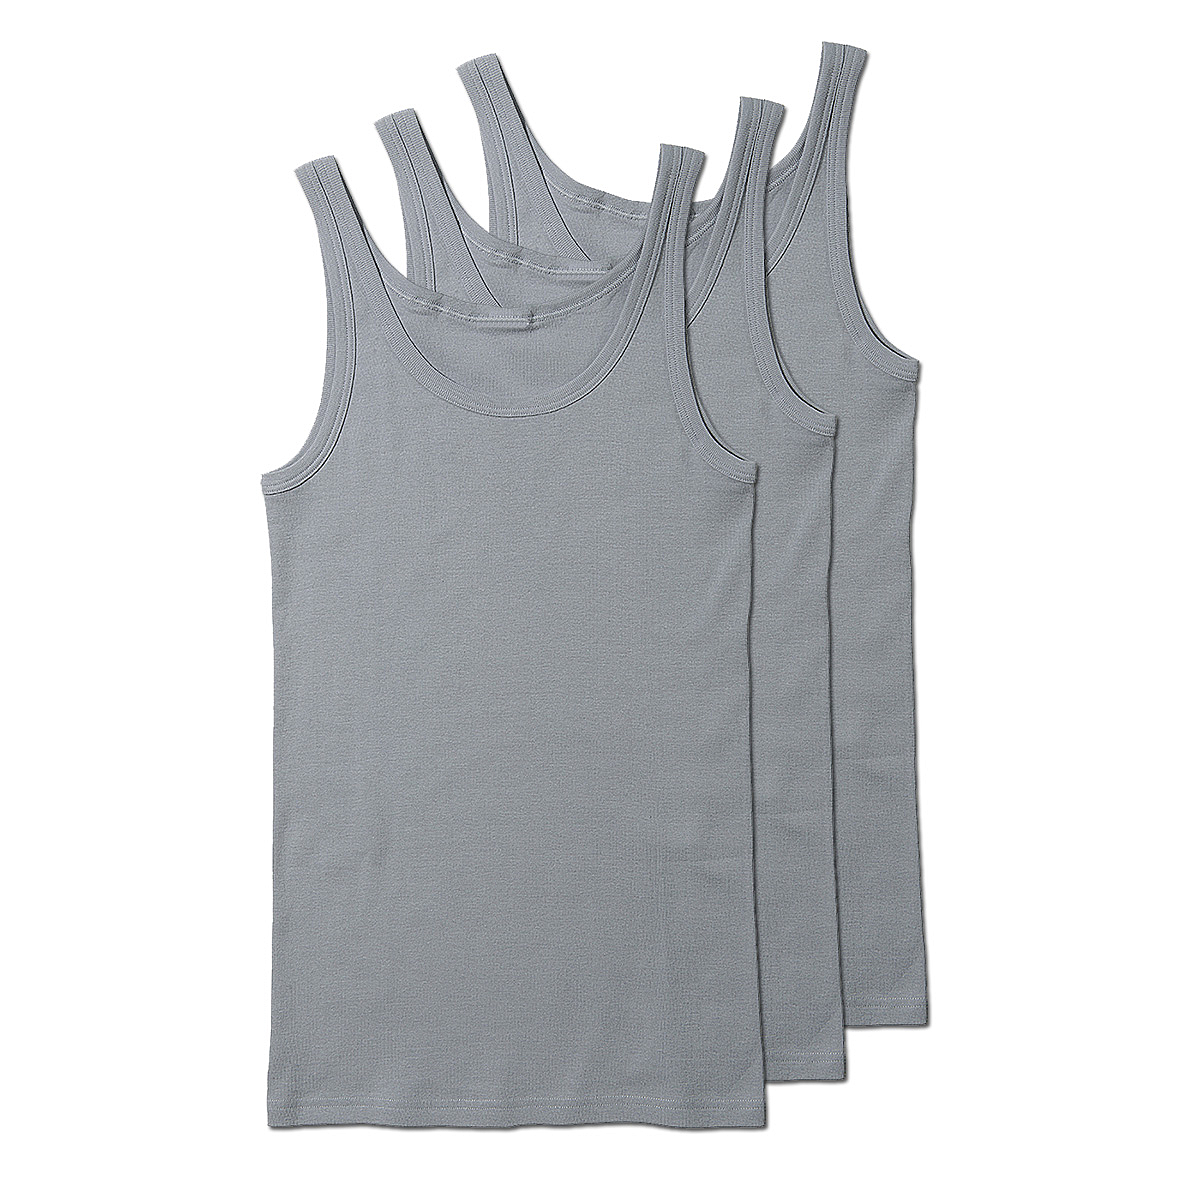 Im günstigen 3er Pack Farbe hellgrau Größenspezialist Männermode | Unterhemd Feinripp | 